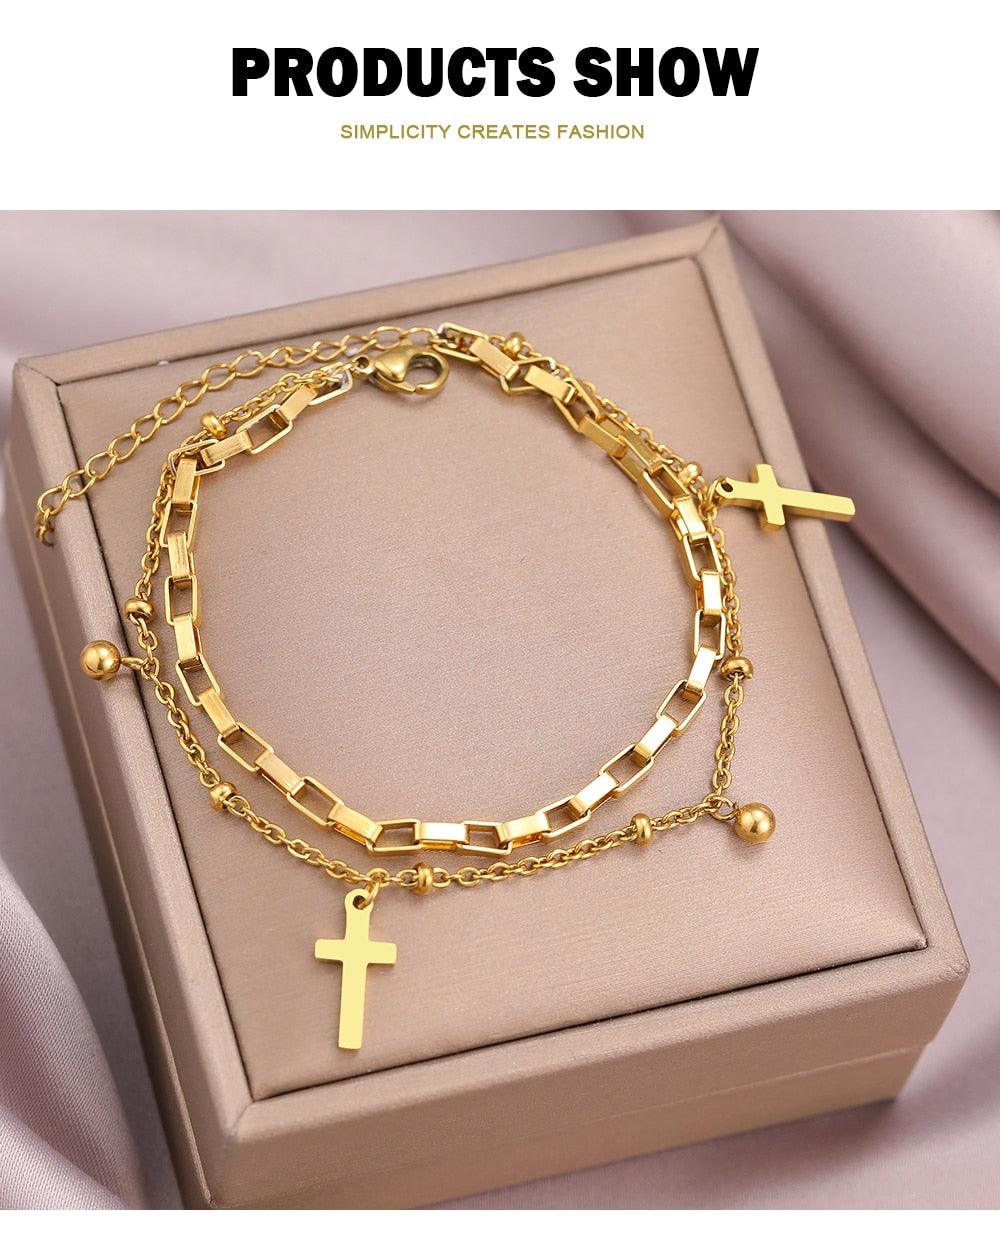 NEW Stainless Steel Bracelets Cross Beads Layer Chain Creative Pendant Bracelet For Women - The Jewellery Supermarket